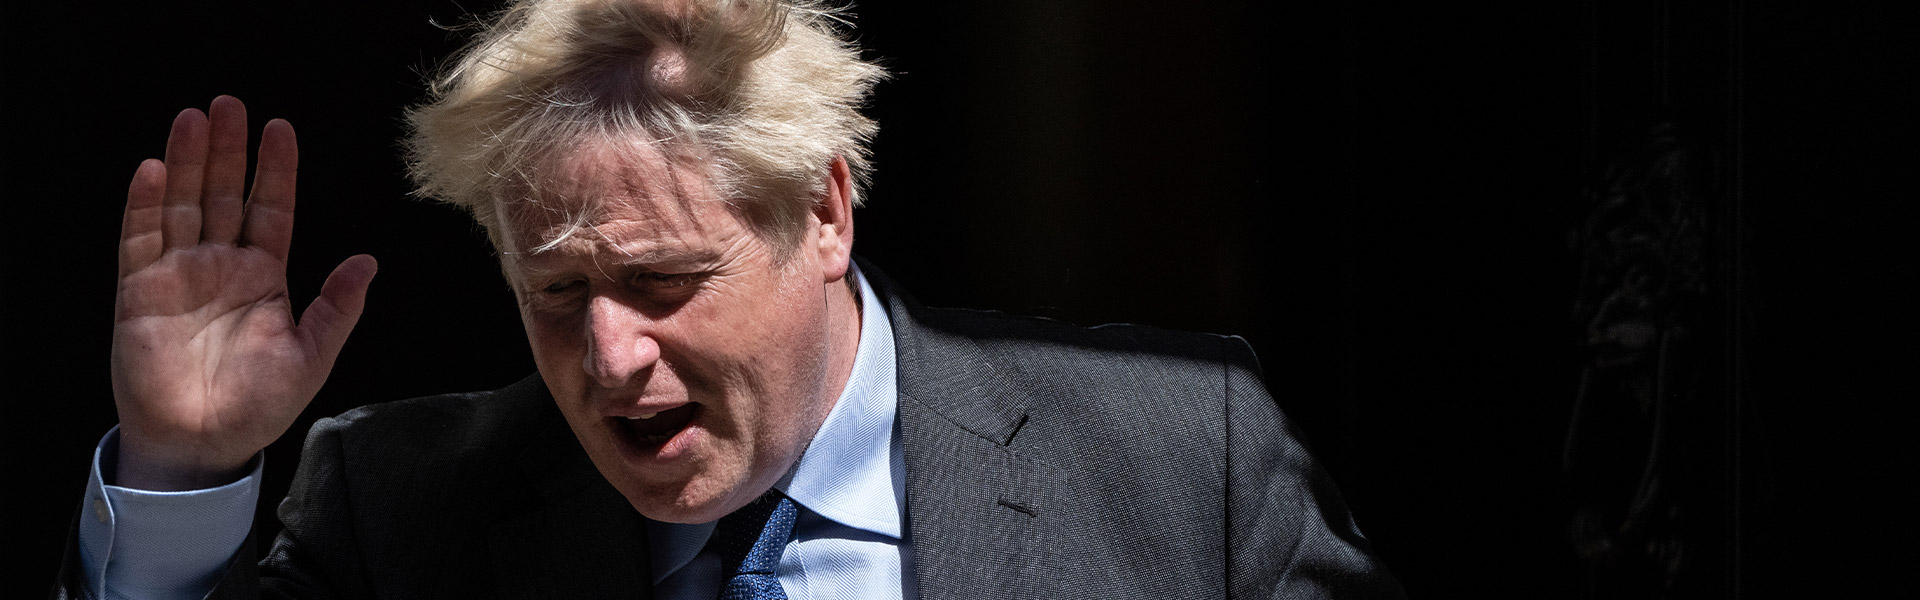 Boris Johnson waving while leaving Downing Street